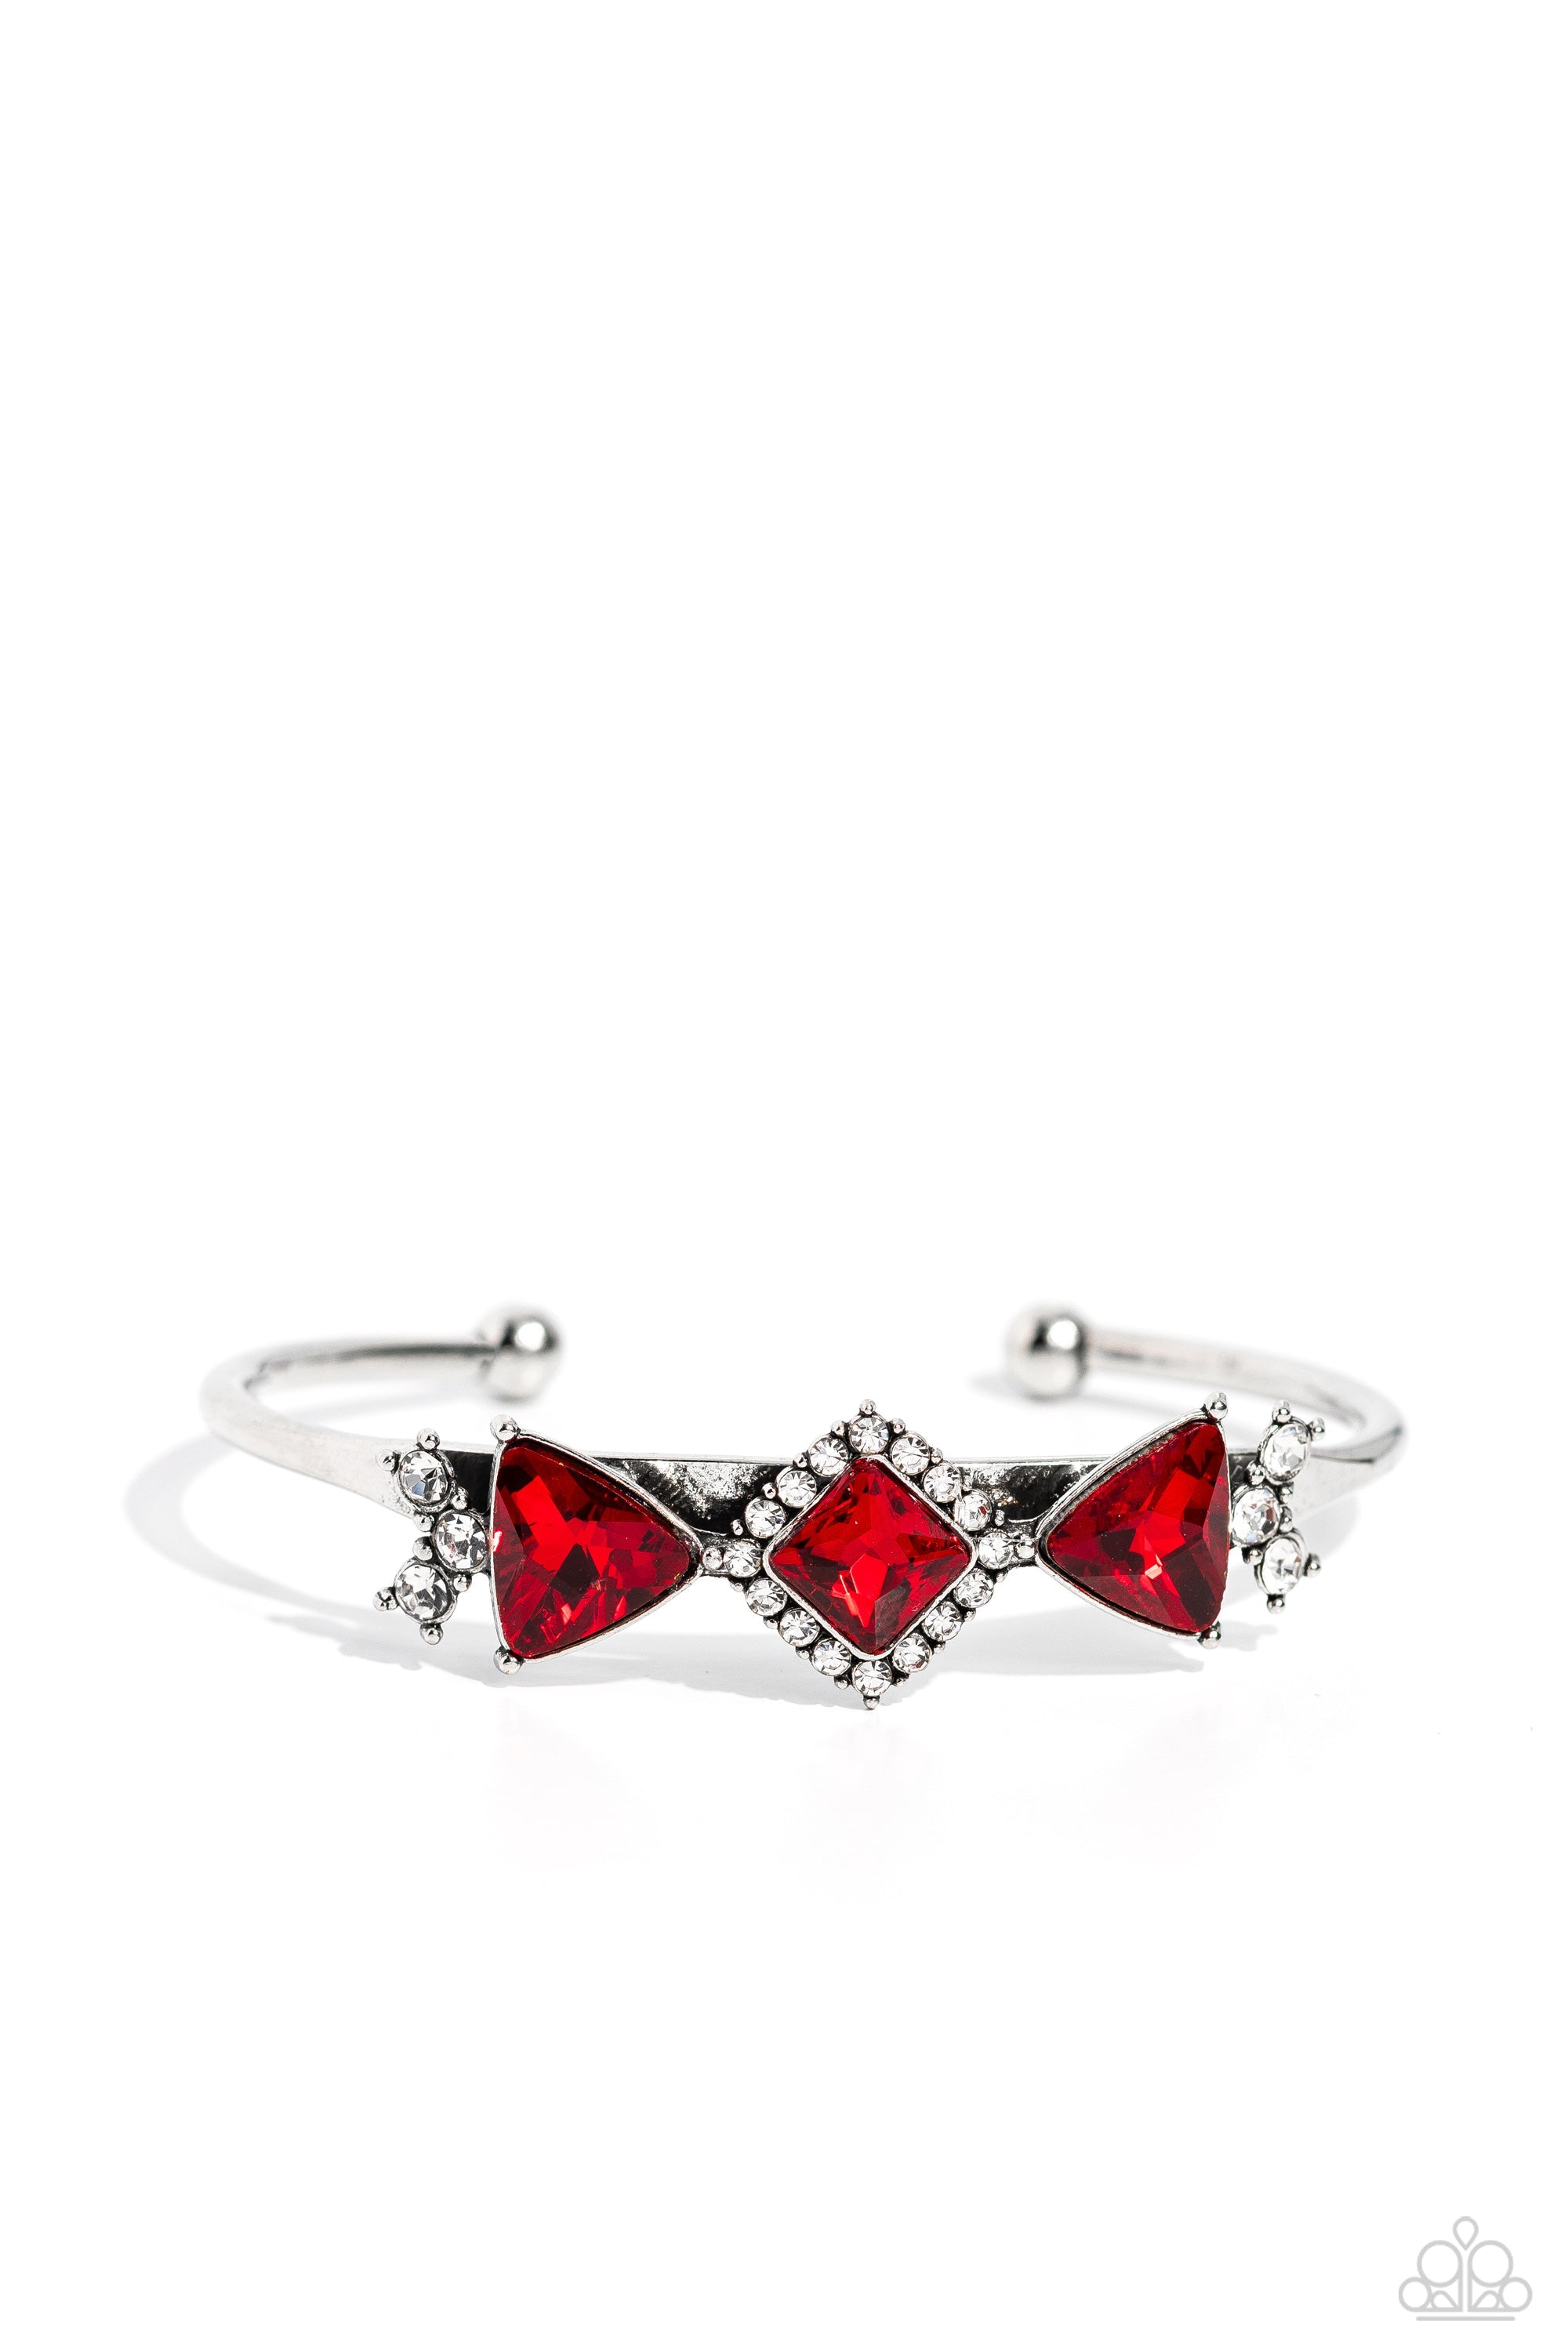 Strategic Sparkle Red Rhinestone Cuff Bracelet - Paparazzi Accessories- lightbox - CarasShop.com - $5 Jewelry by Cara Jewels